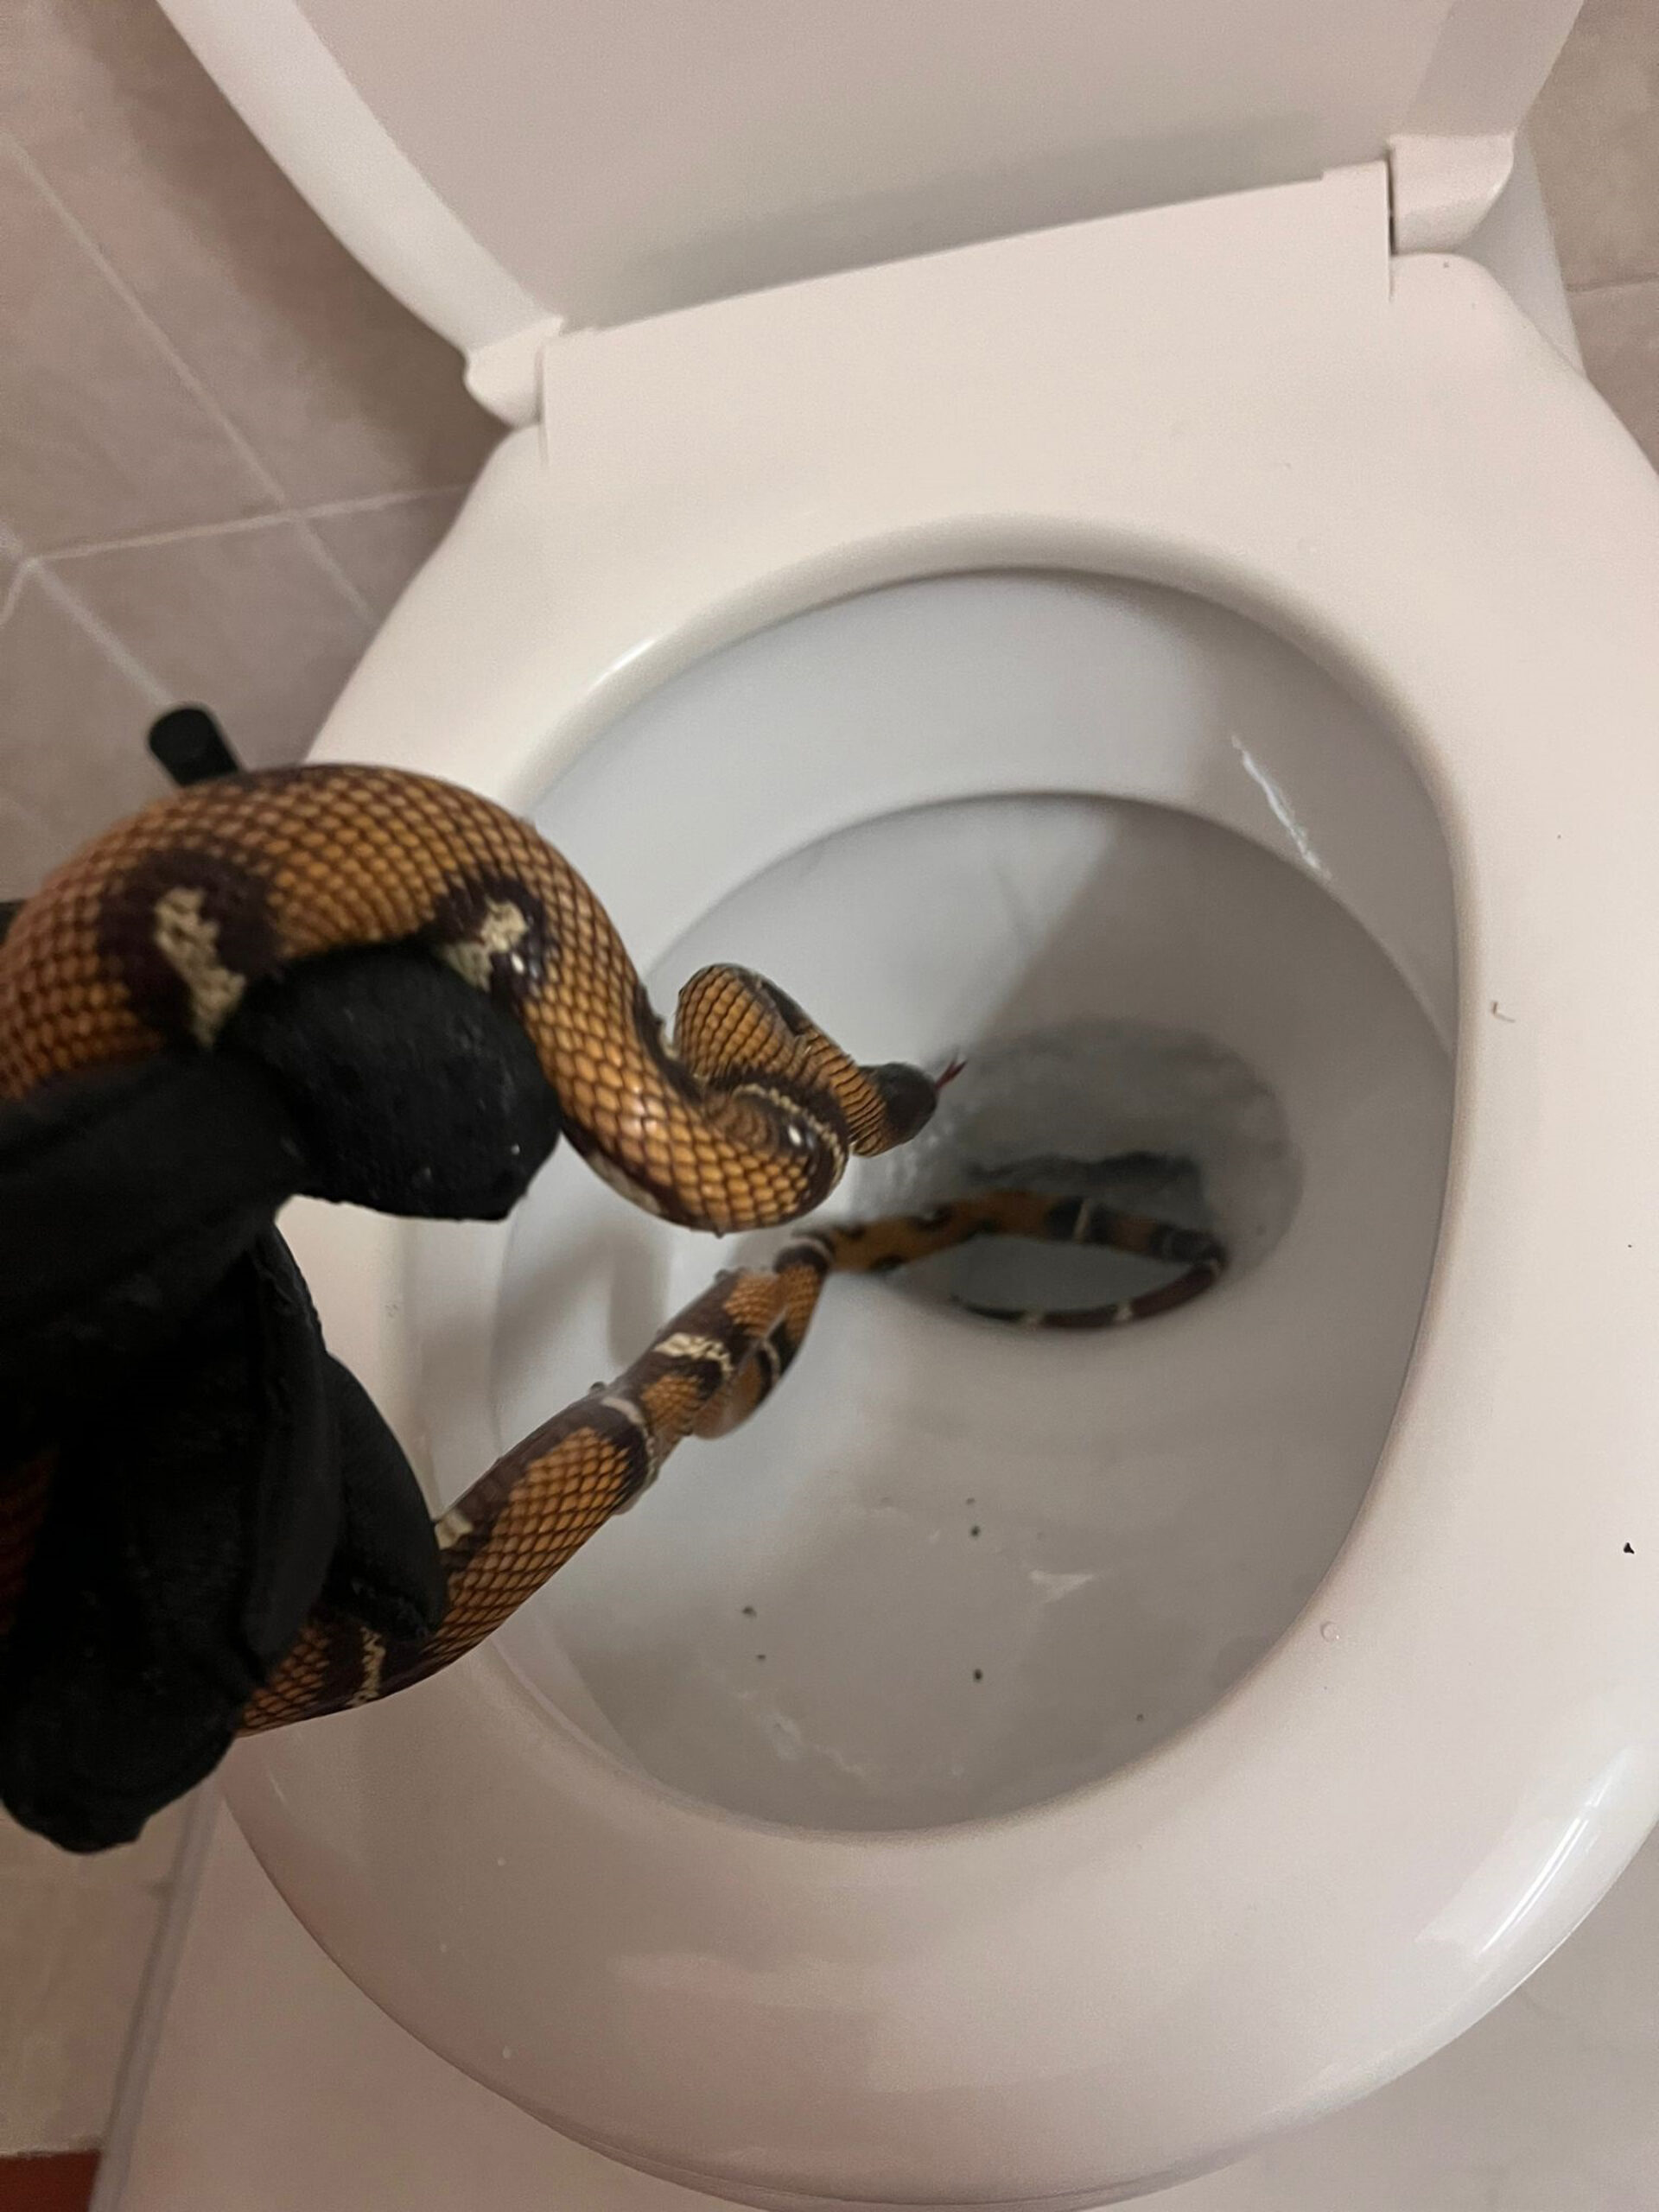 Horrified Holidaymaker Finds Snake In Hotel Loo